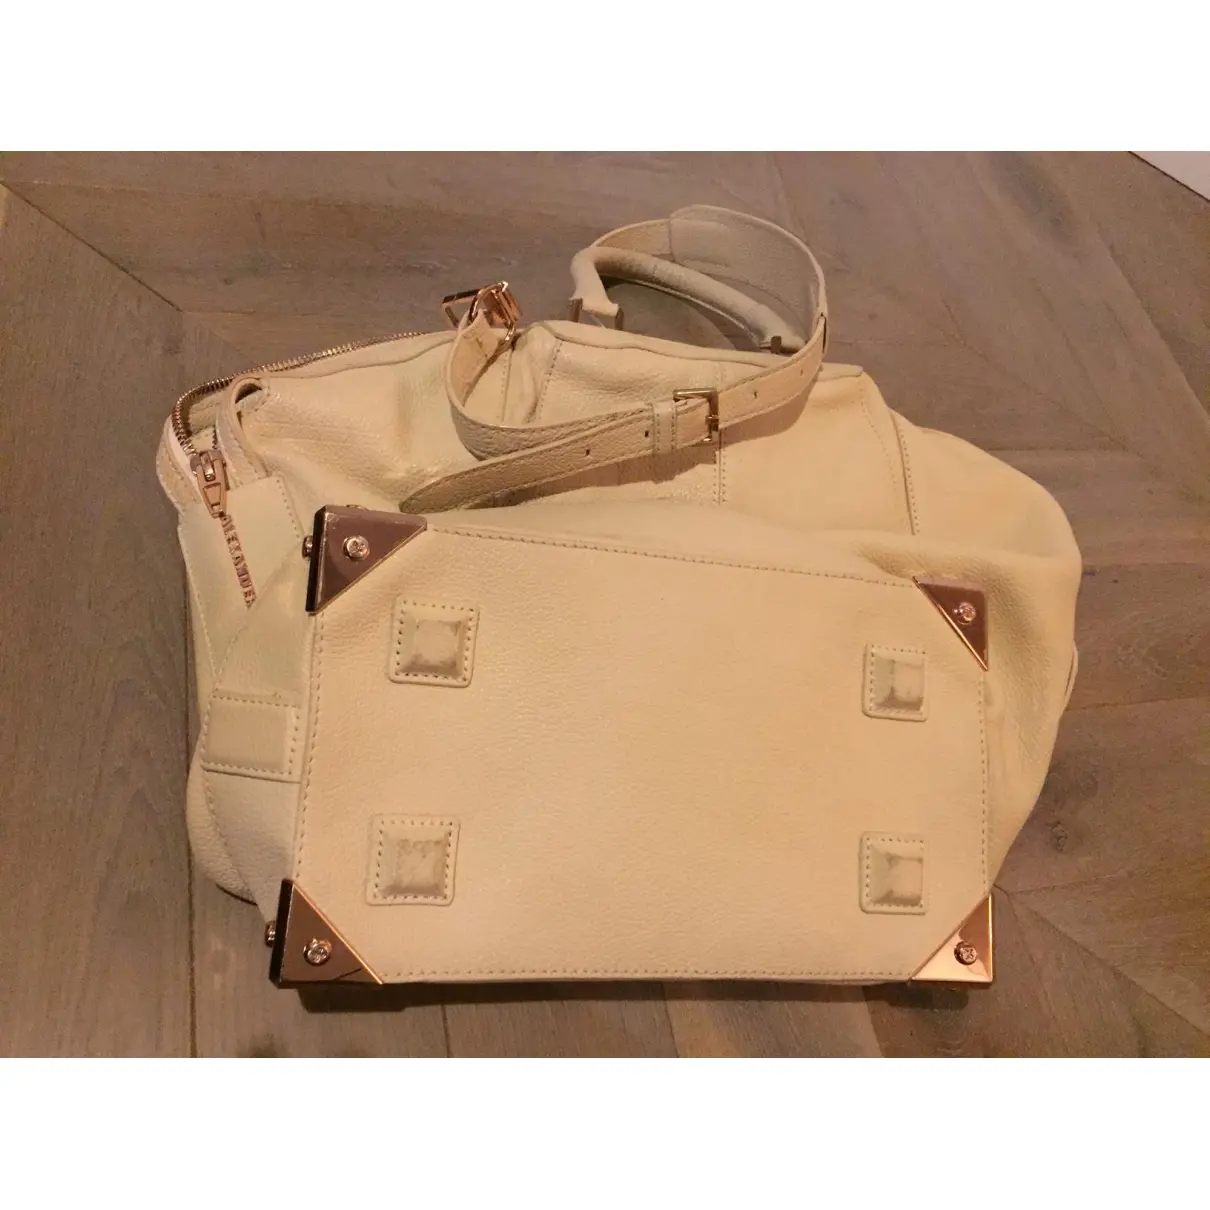 Alexander Wang Emile leather handbag for sale